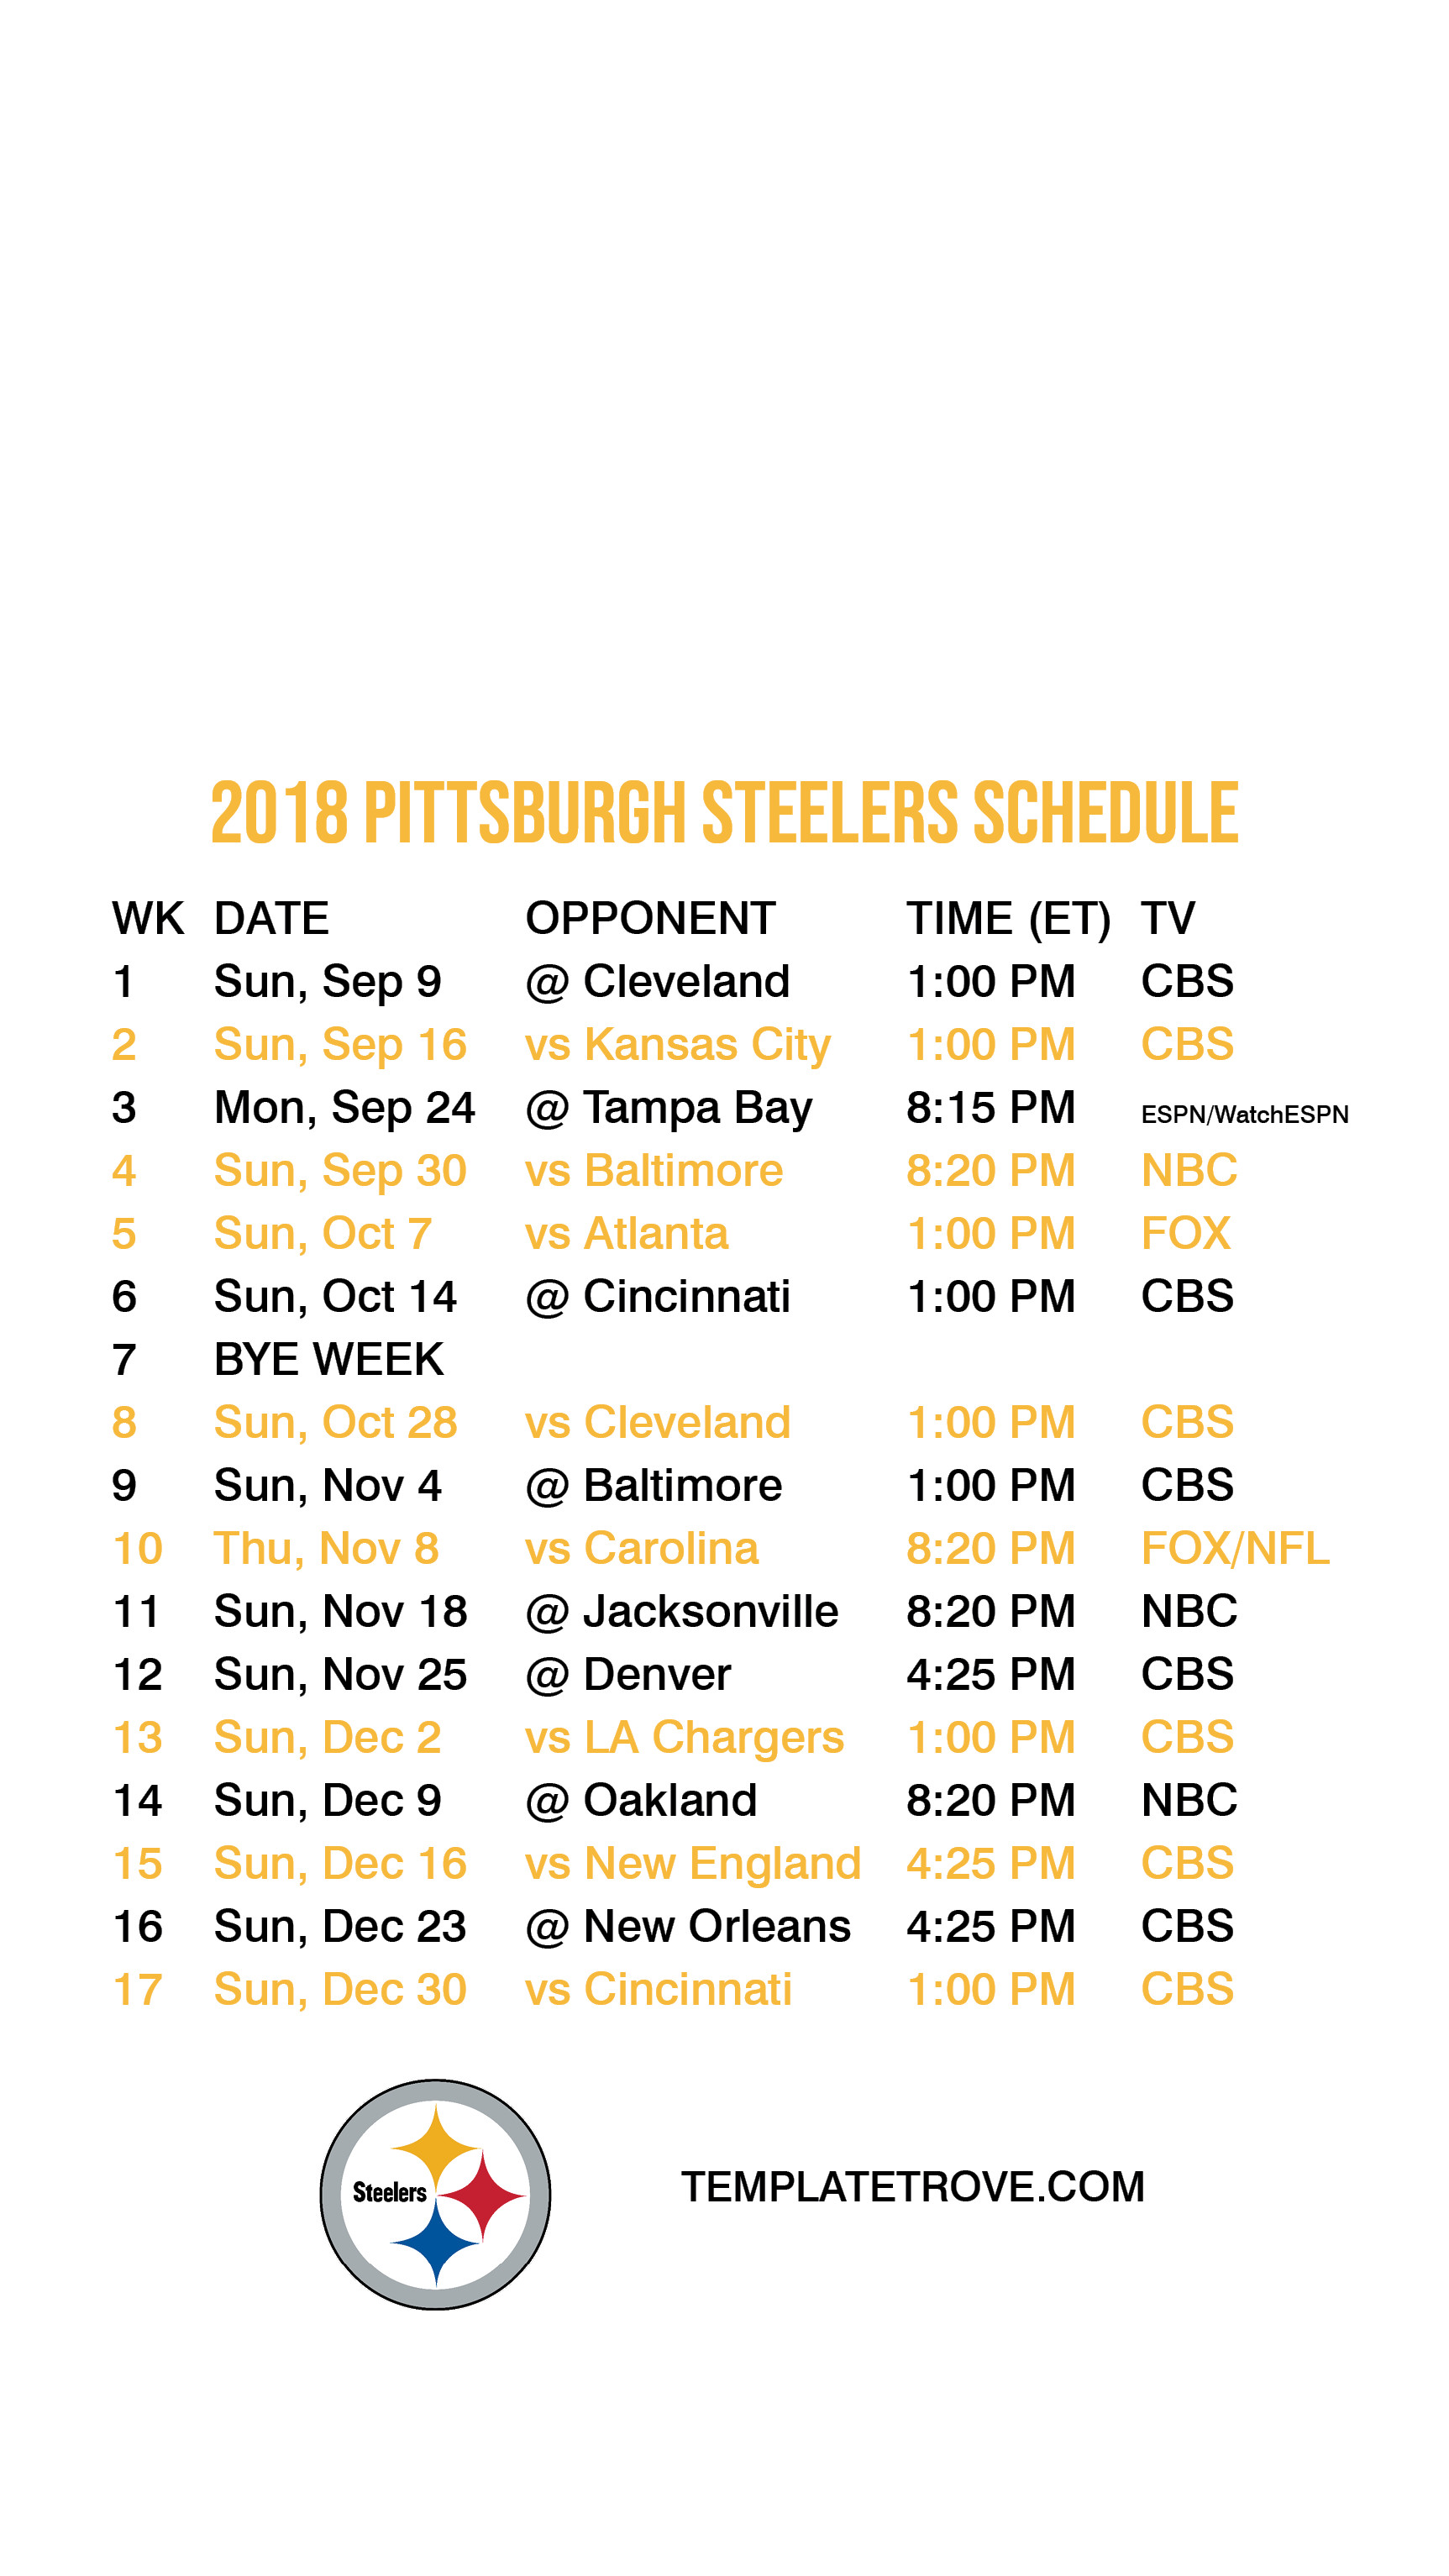 1725x3067 Astonishing Ideas Steelers Wallpaper 2019 2018 Pittsburgh Lock Screen  Schedule For Iphone 6 7 8 Plus ...